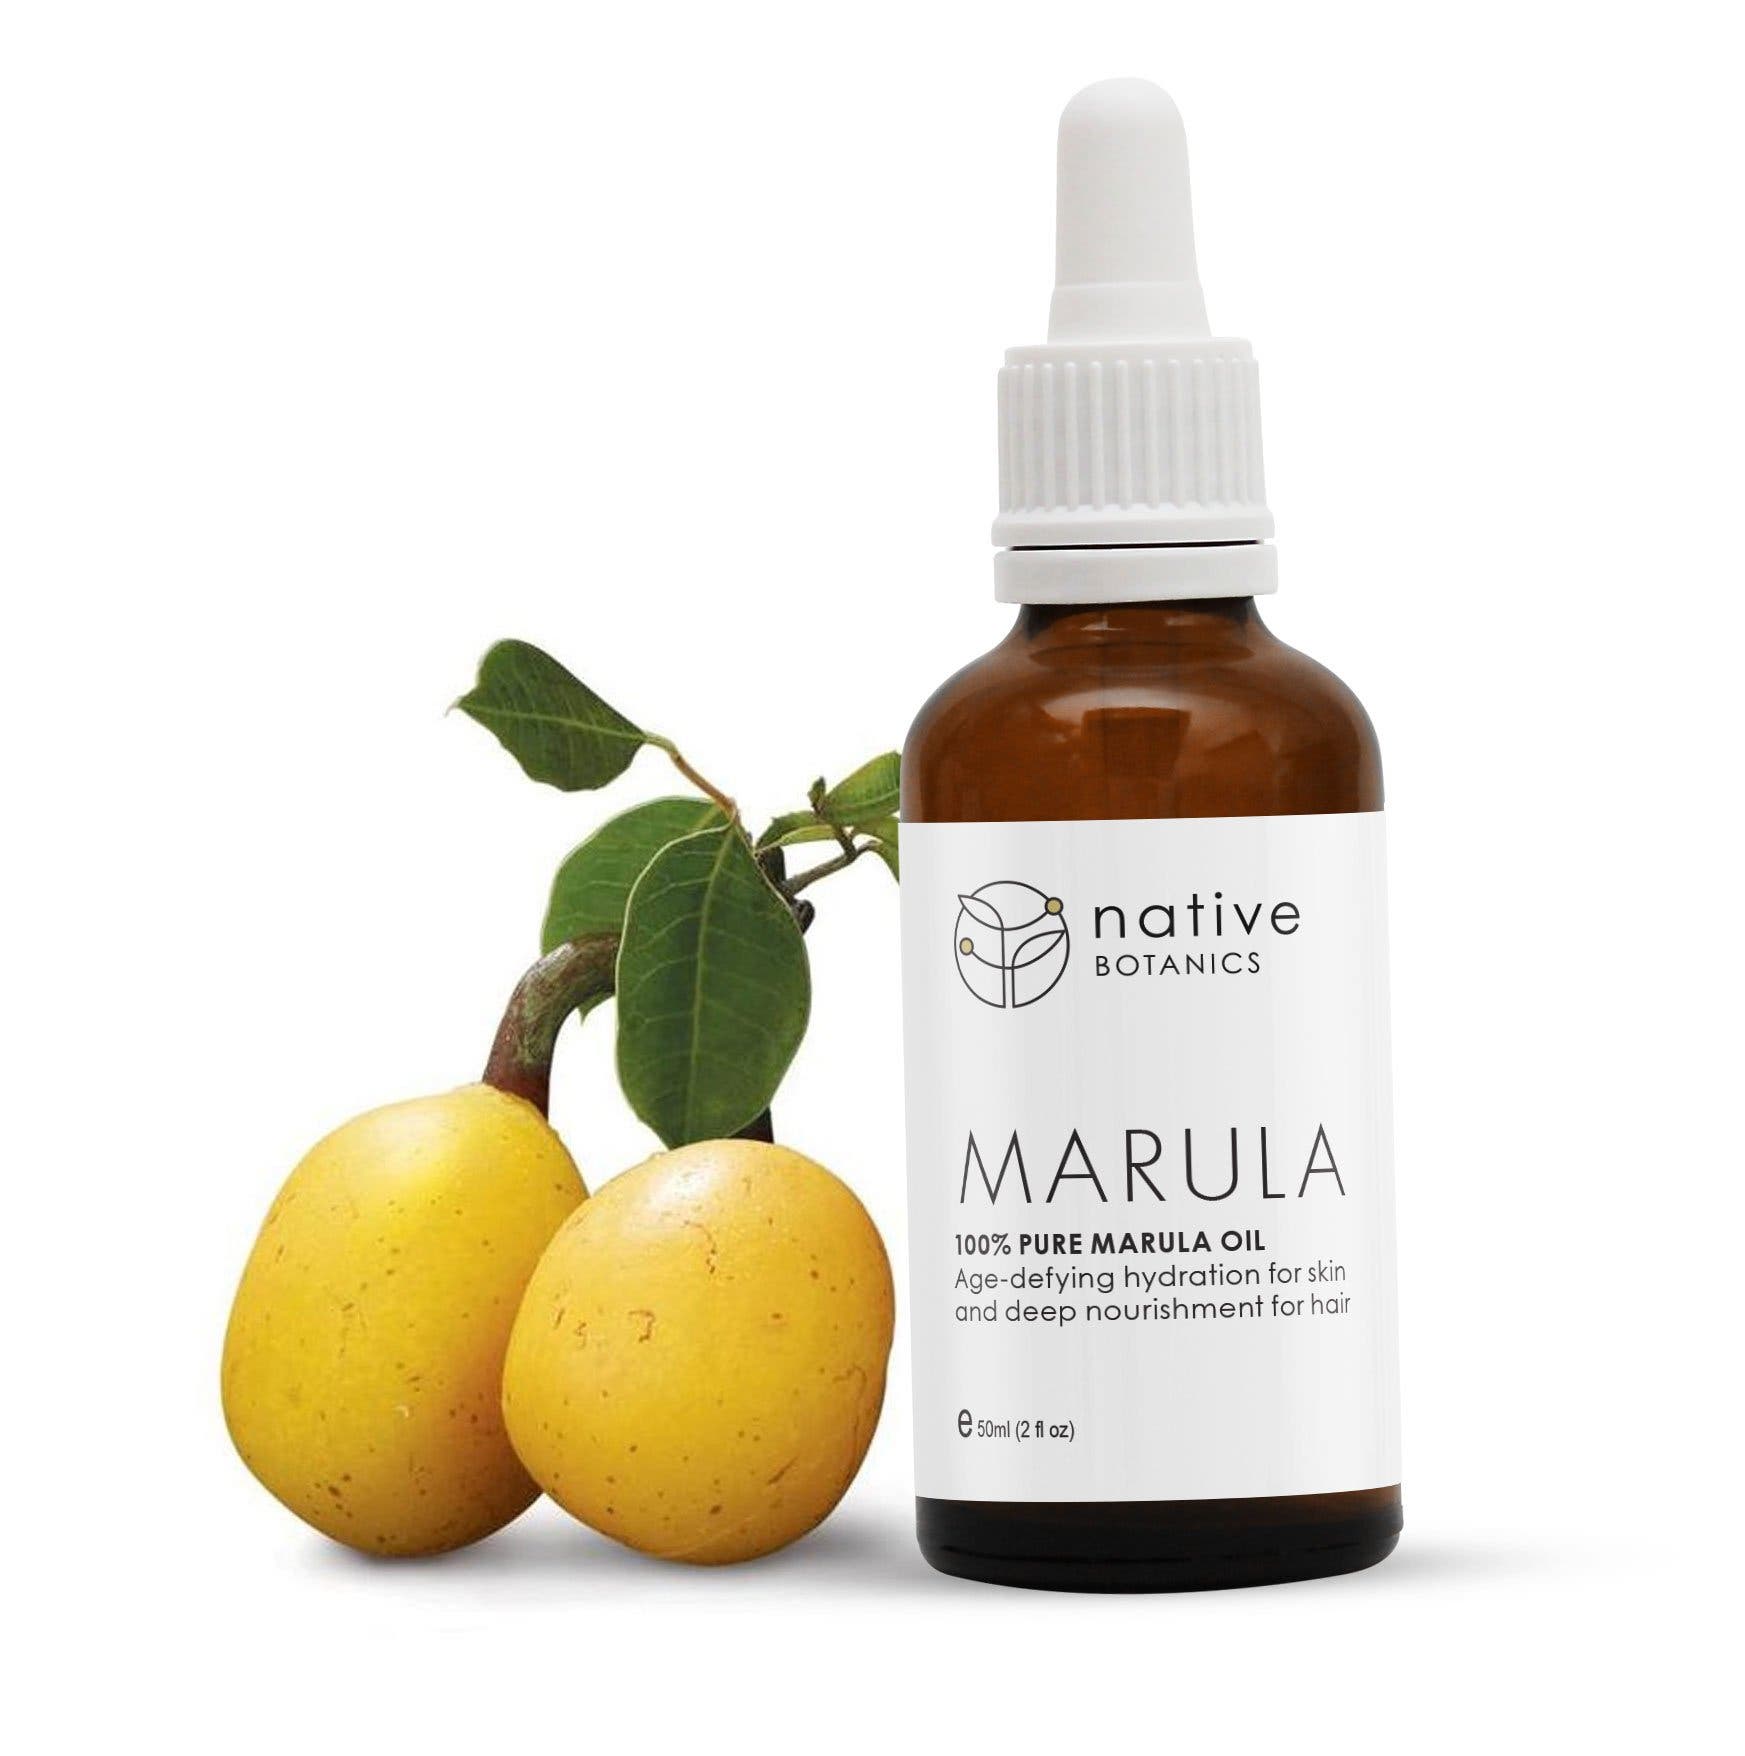 Marula Oil Benefits, Uses, and Precautions